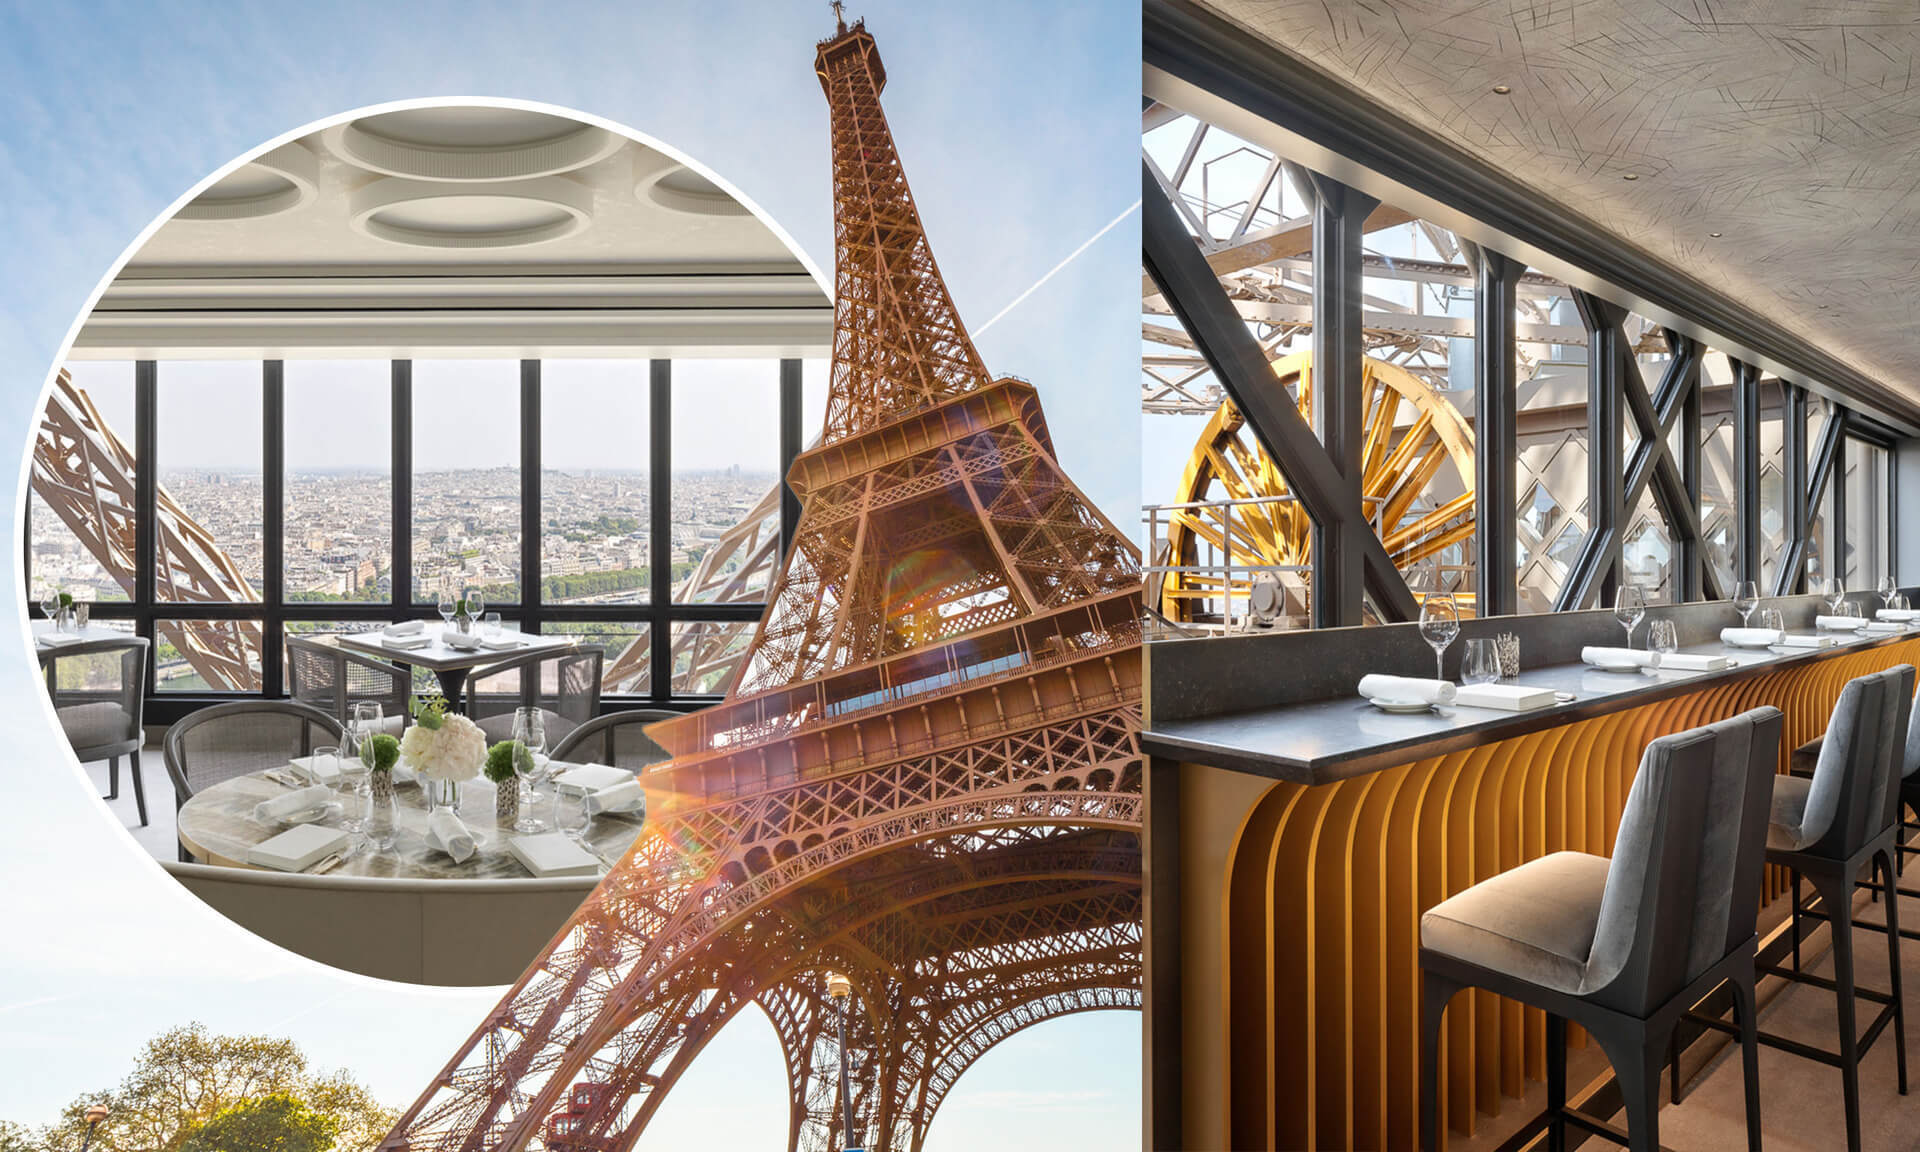 Restaurant Le Jules Verne - 2nd floor of Eiffel Tower